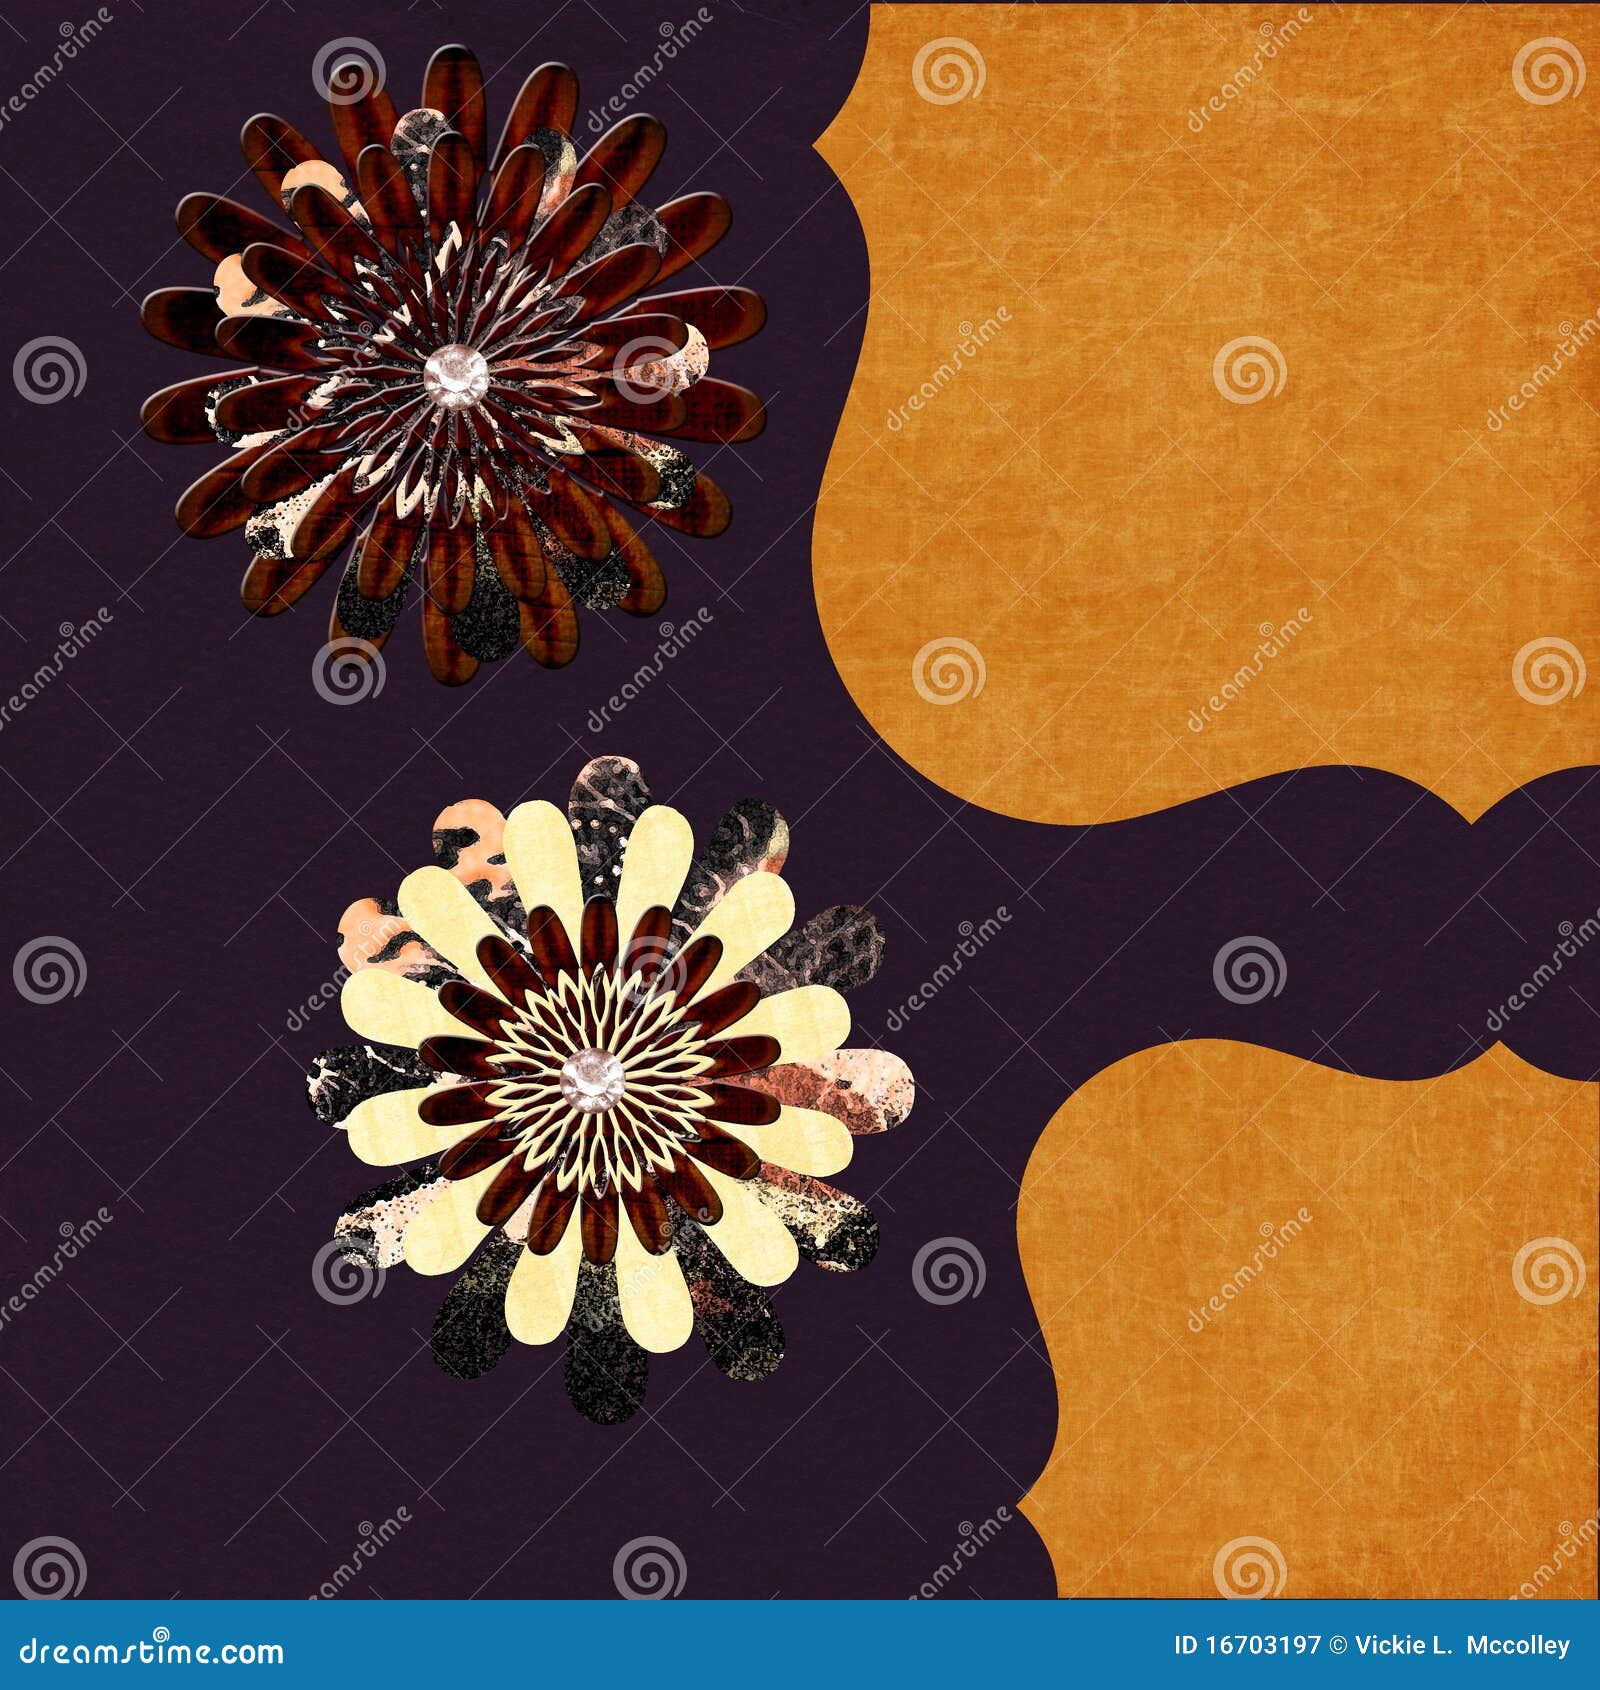 dimensional flowers